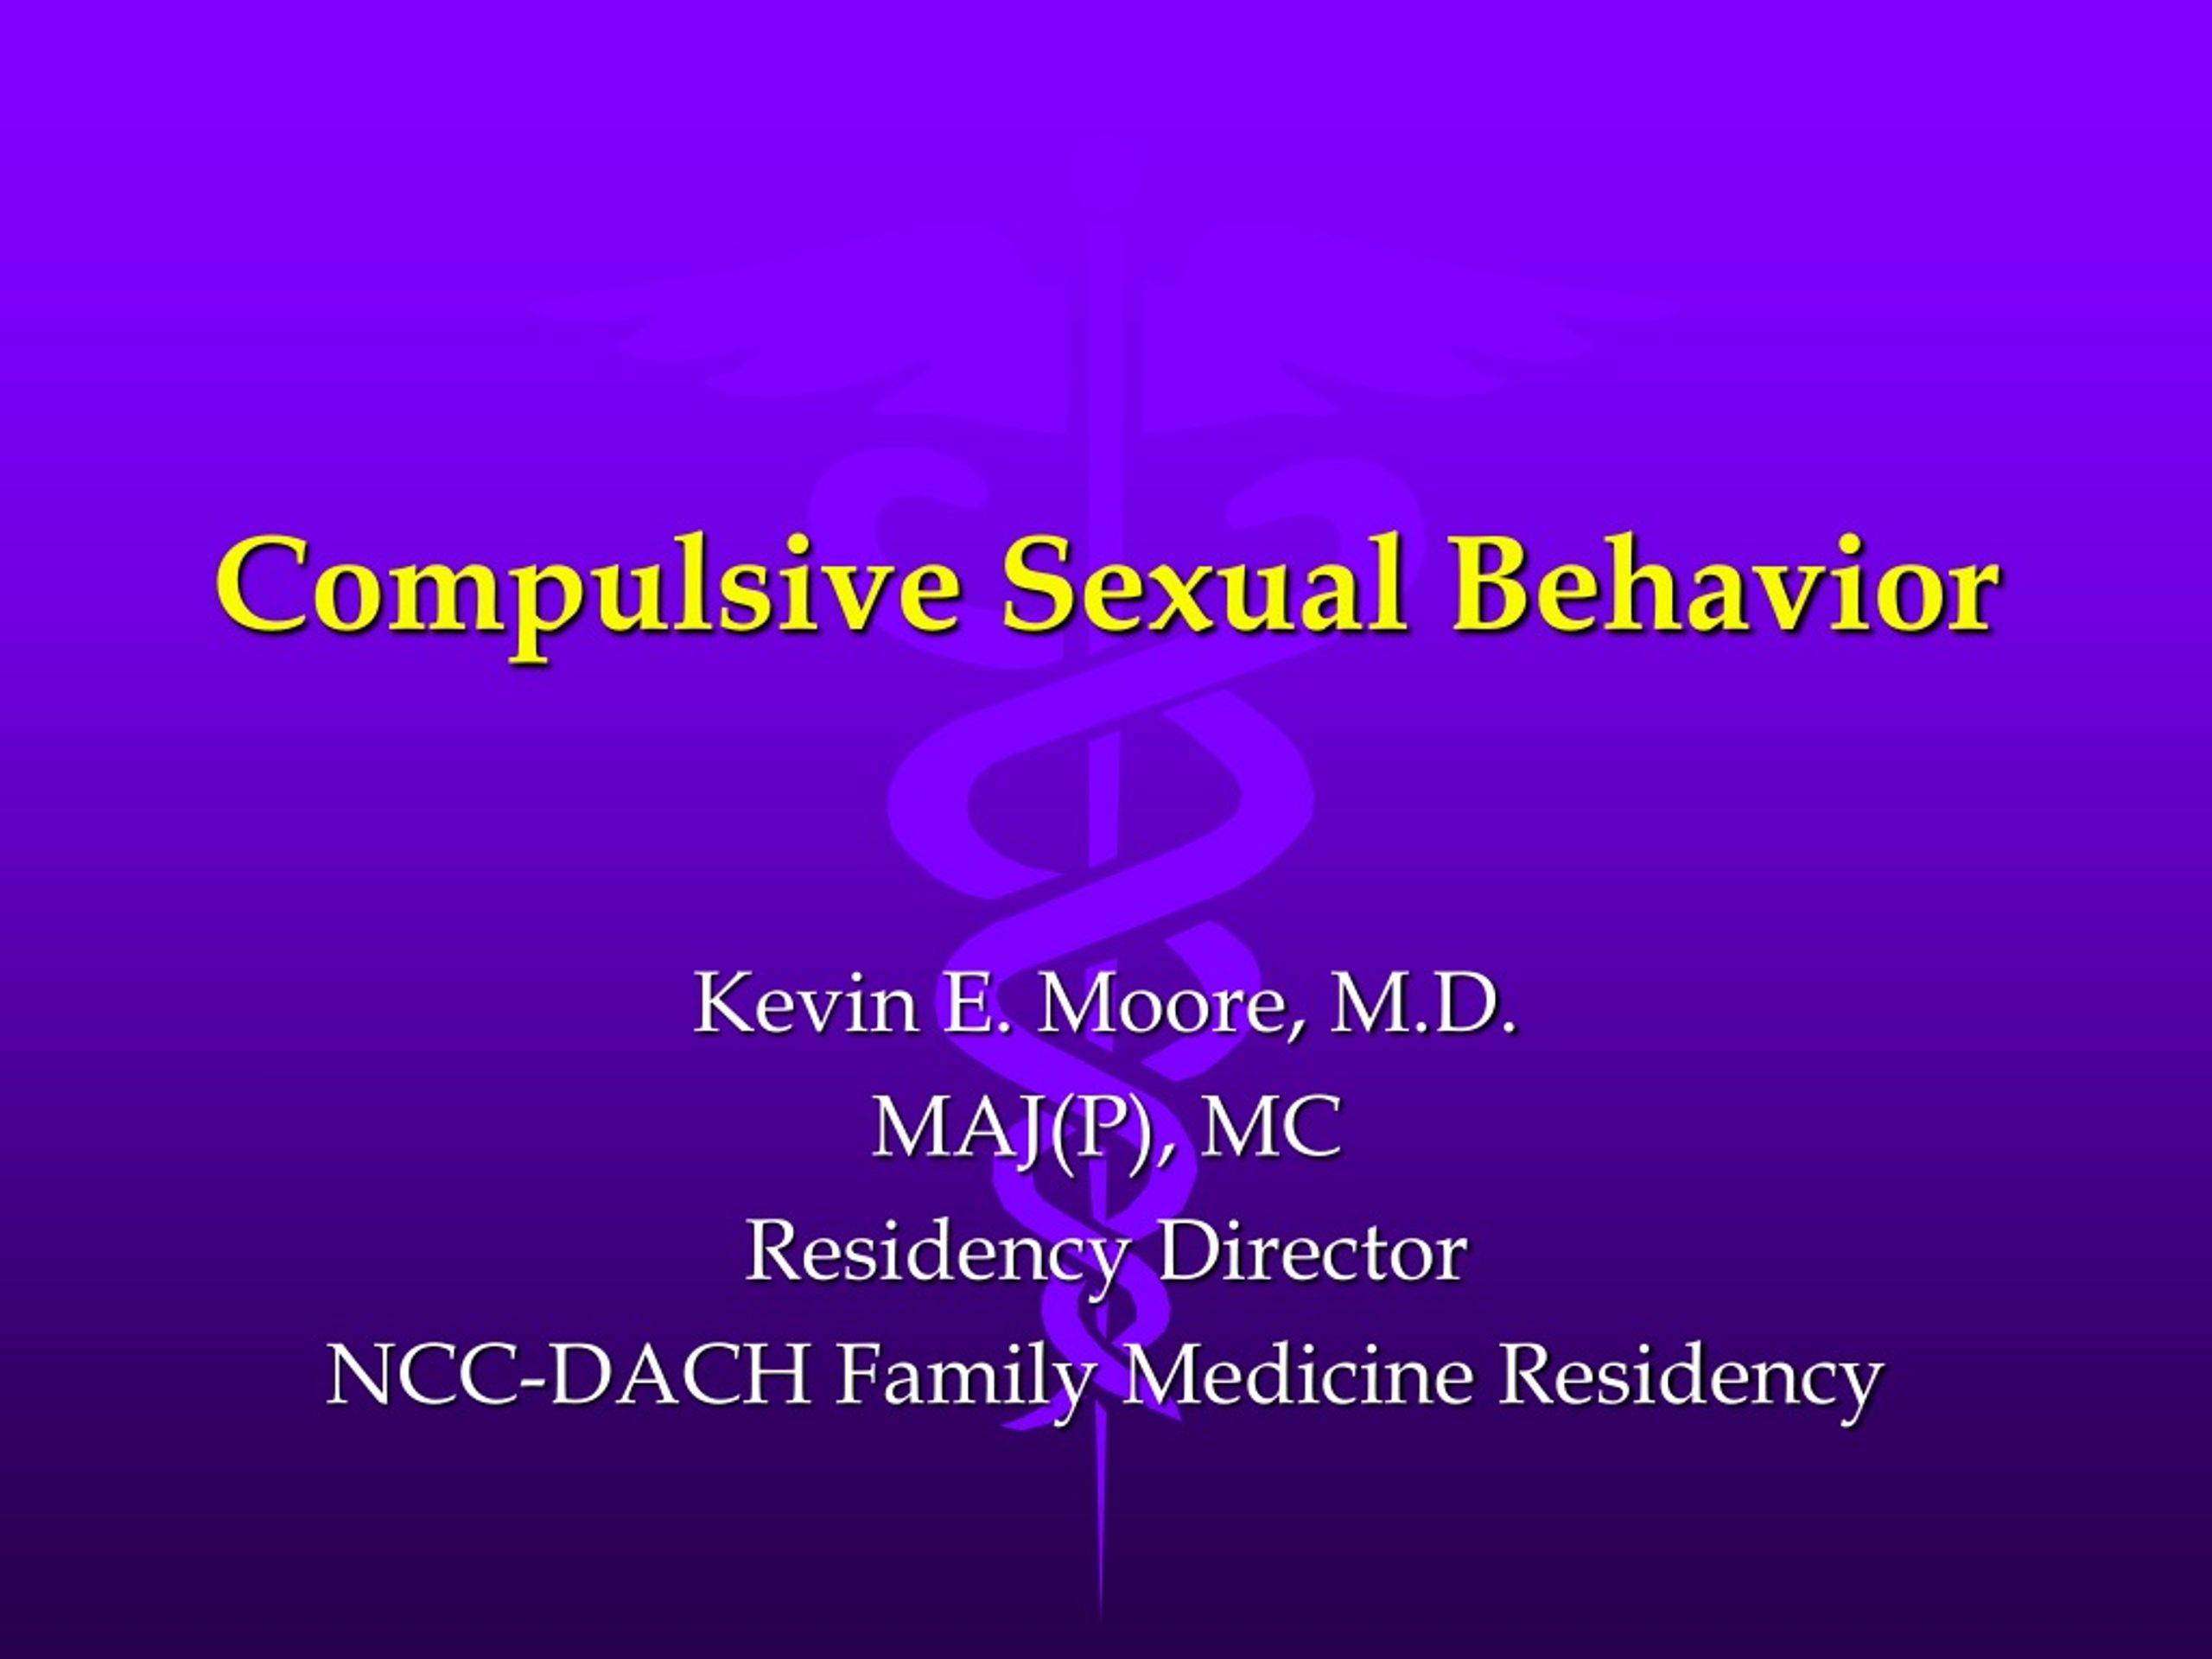 Ppt Compulsive Sexual Behavior Powerpoint Presentation Free Download Id9141225 8990